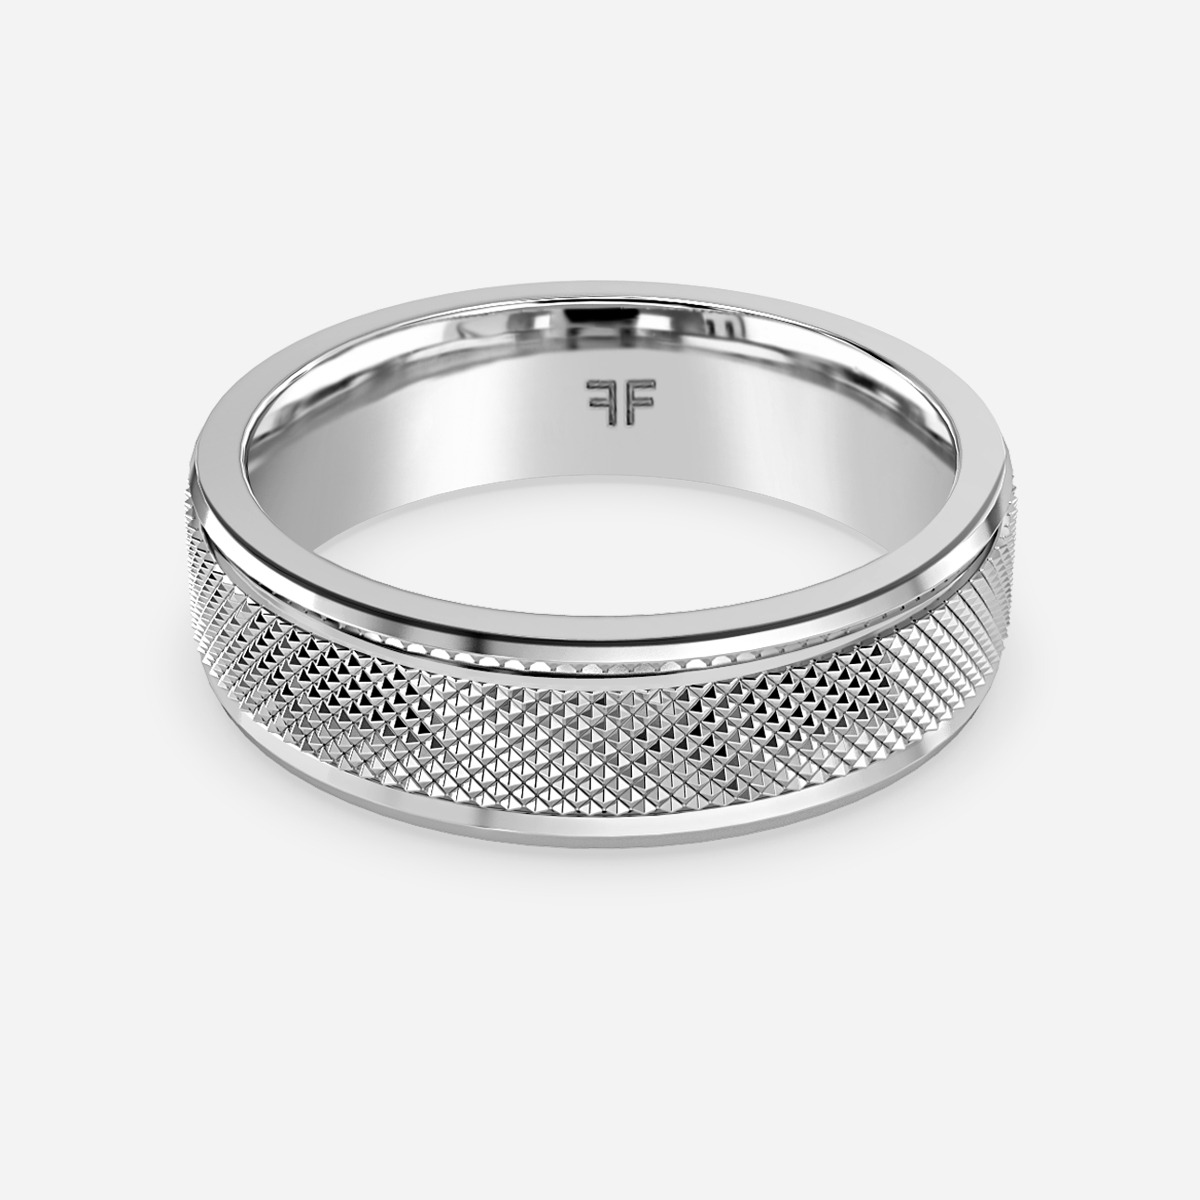 Matteo 6mm Platinum Wedding Ring